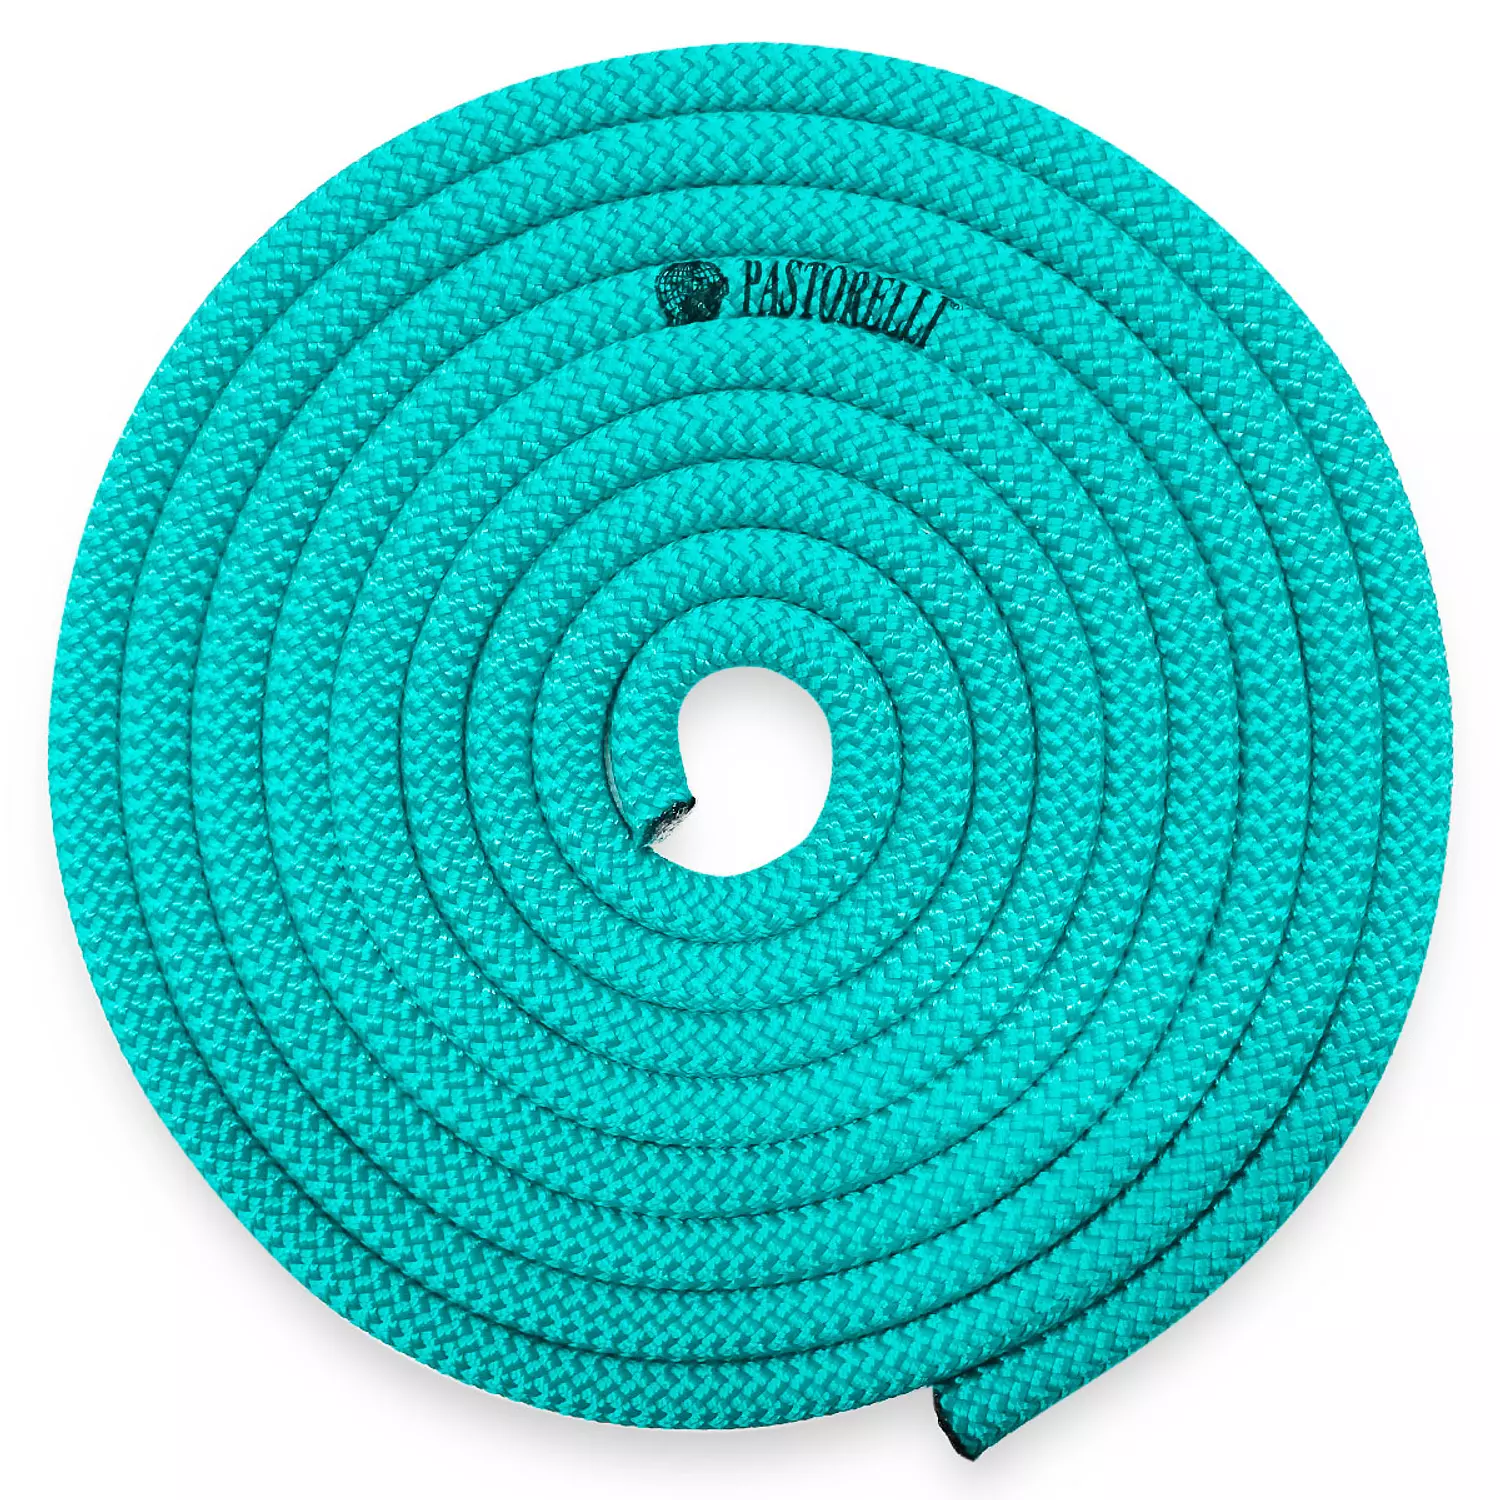 Pastorelli-New Orleans monochromatic rope FIG 3m 8